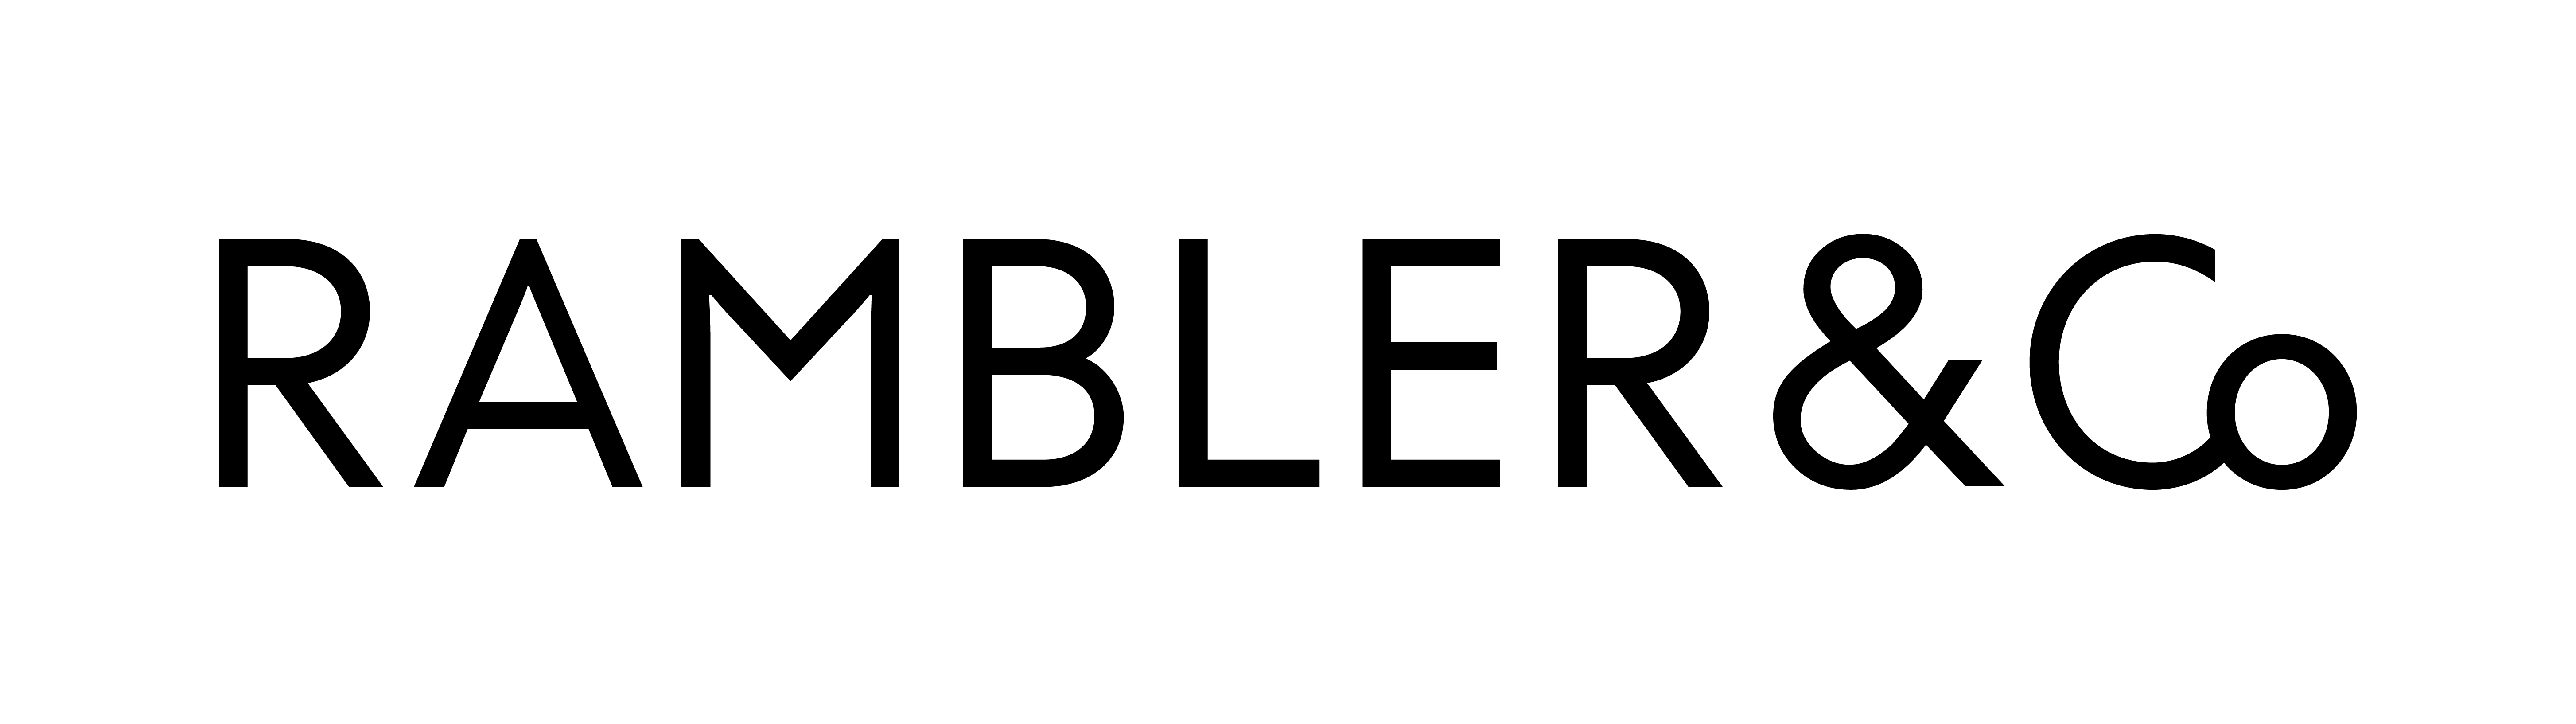 логотип Rambler&Co